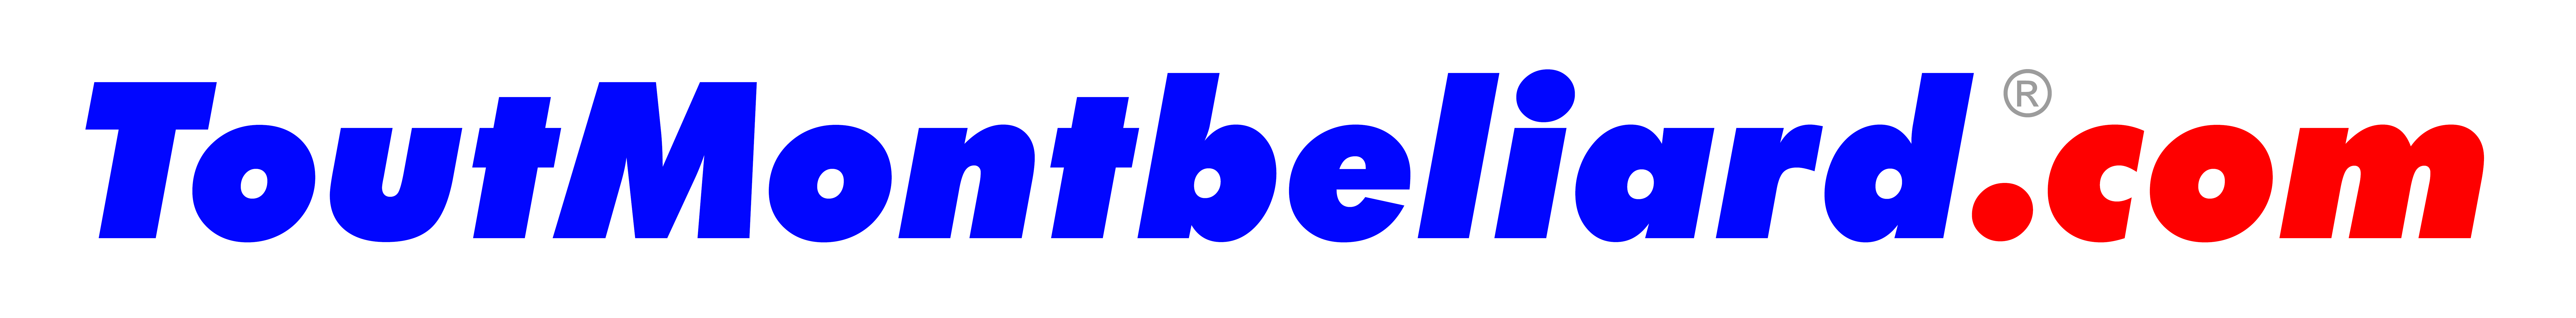 ToutMontbeliard-logo-long